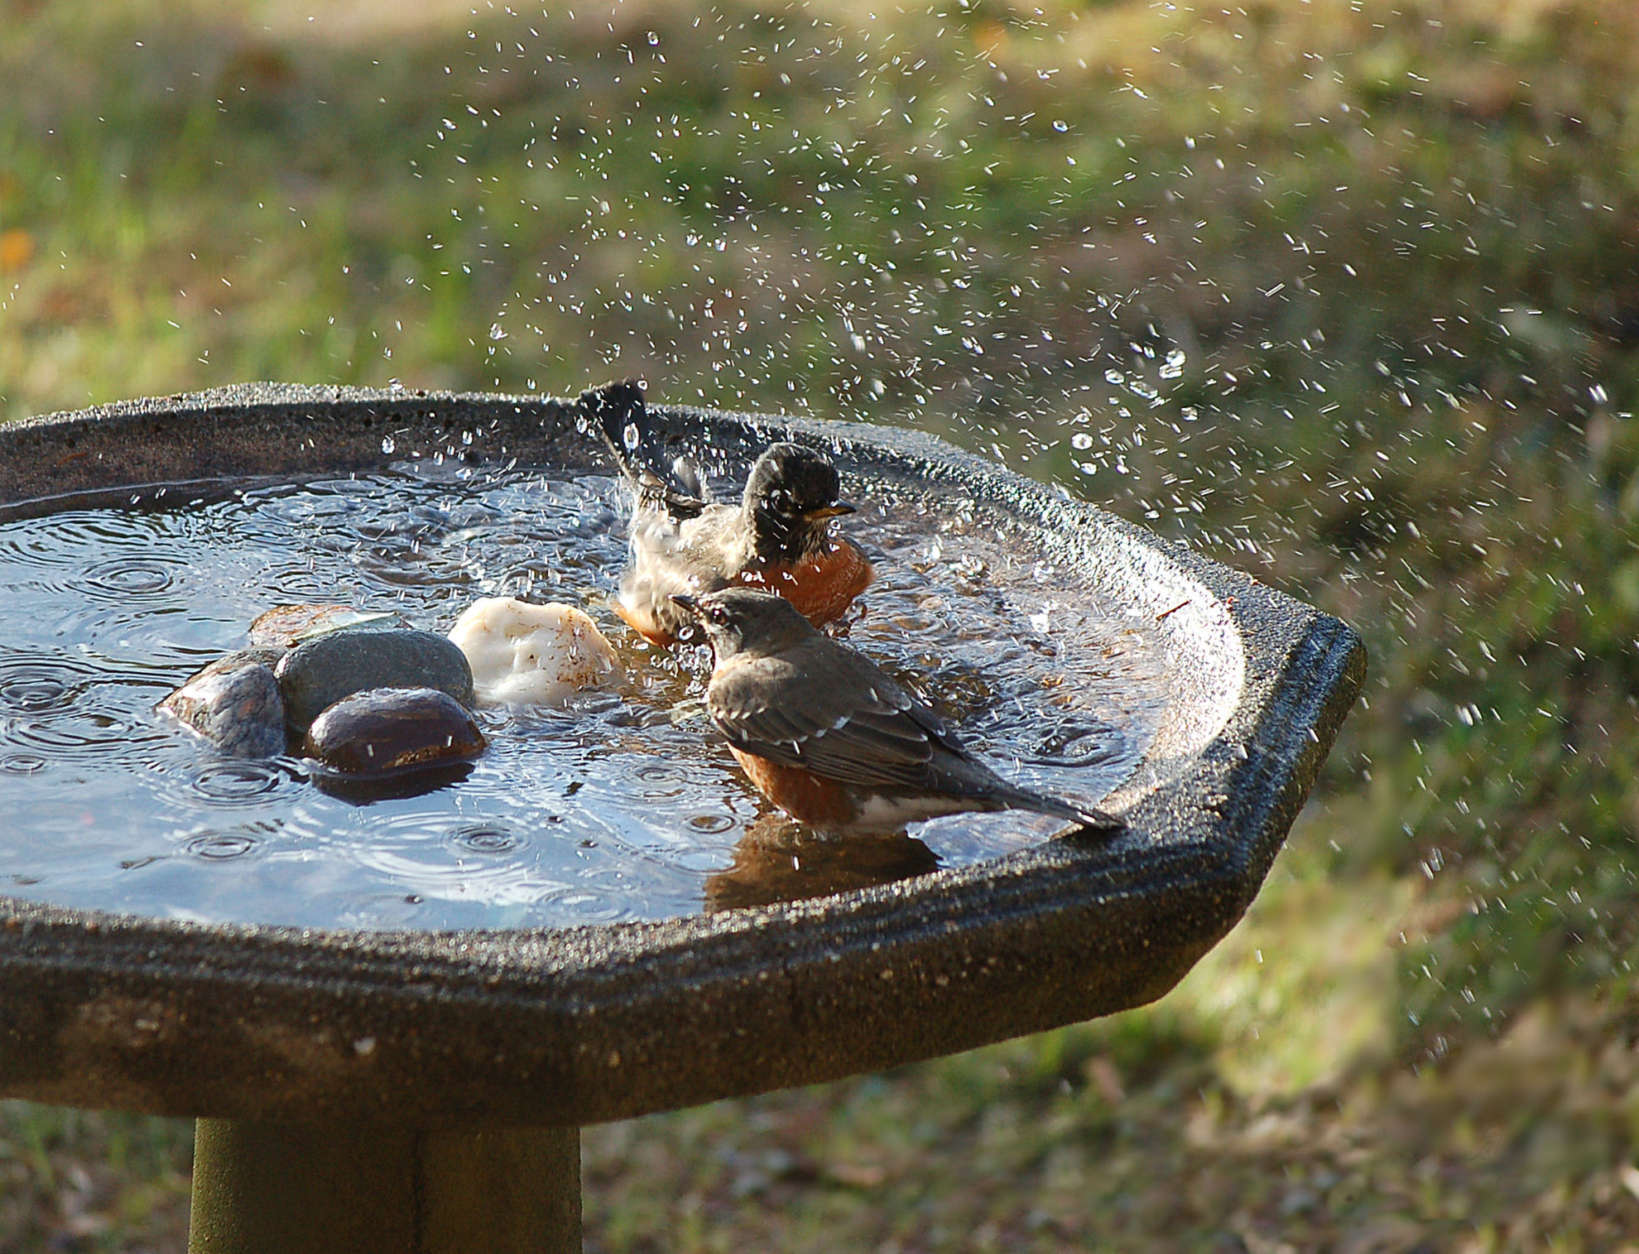 Cape Cod birds taking a bath splashing in a garden birdbath in autumn.